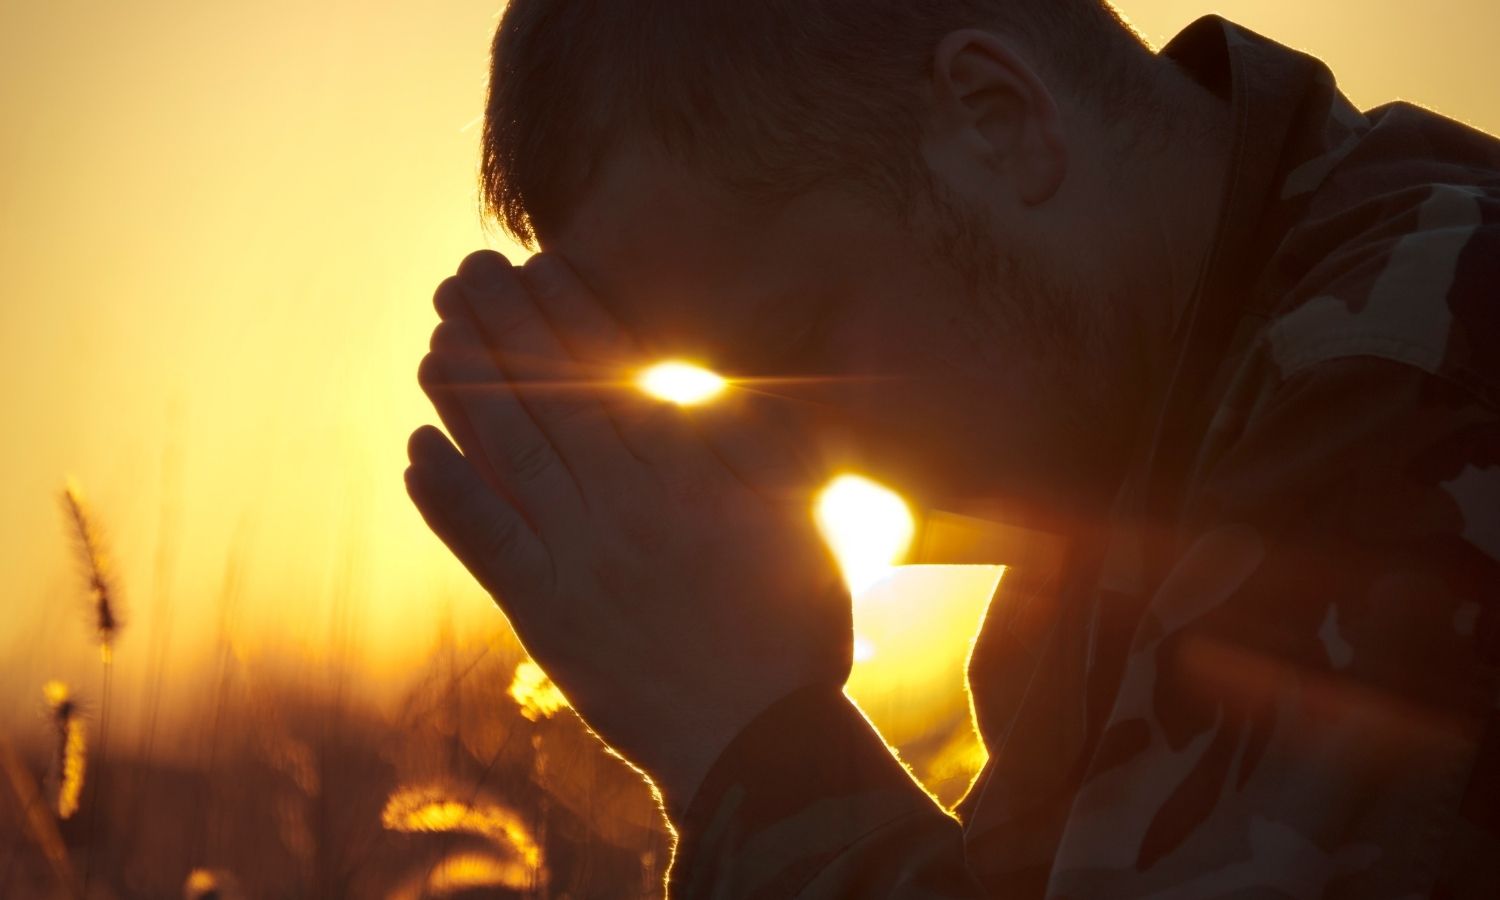 A soldier in trauma chaplaincy praying